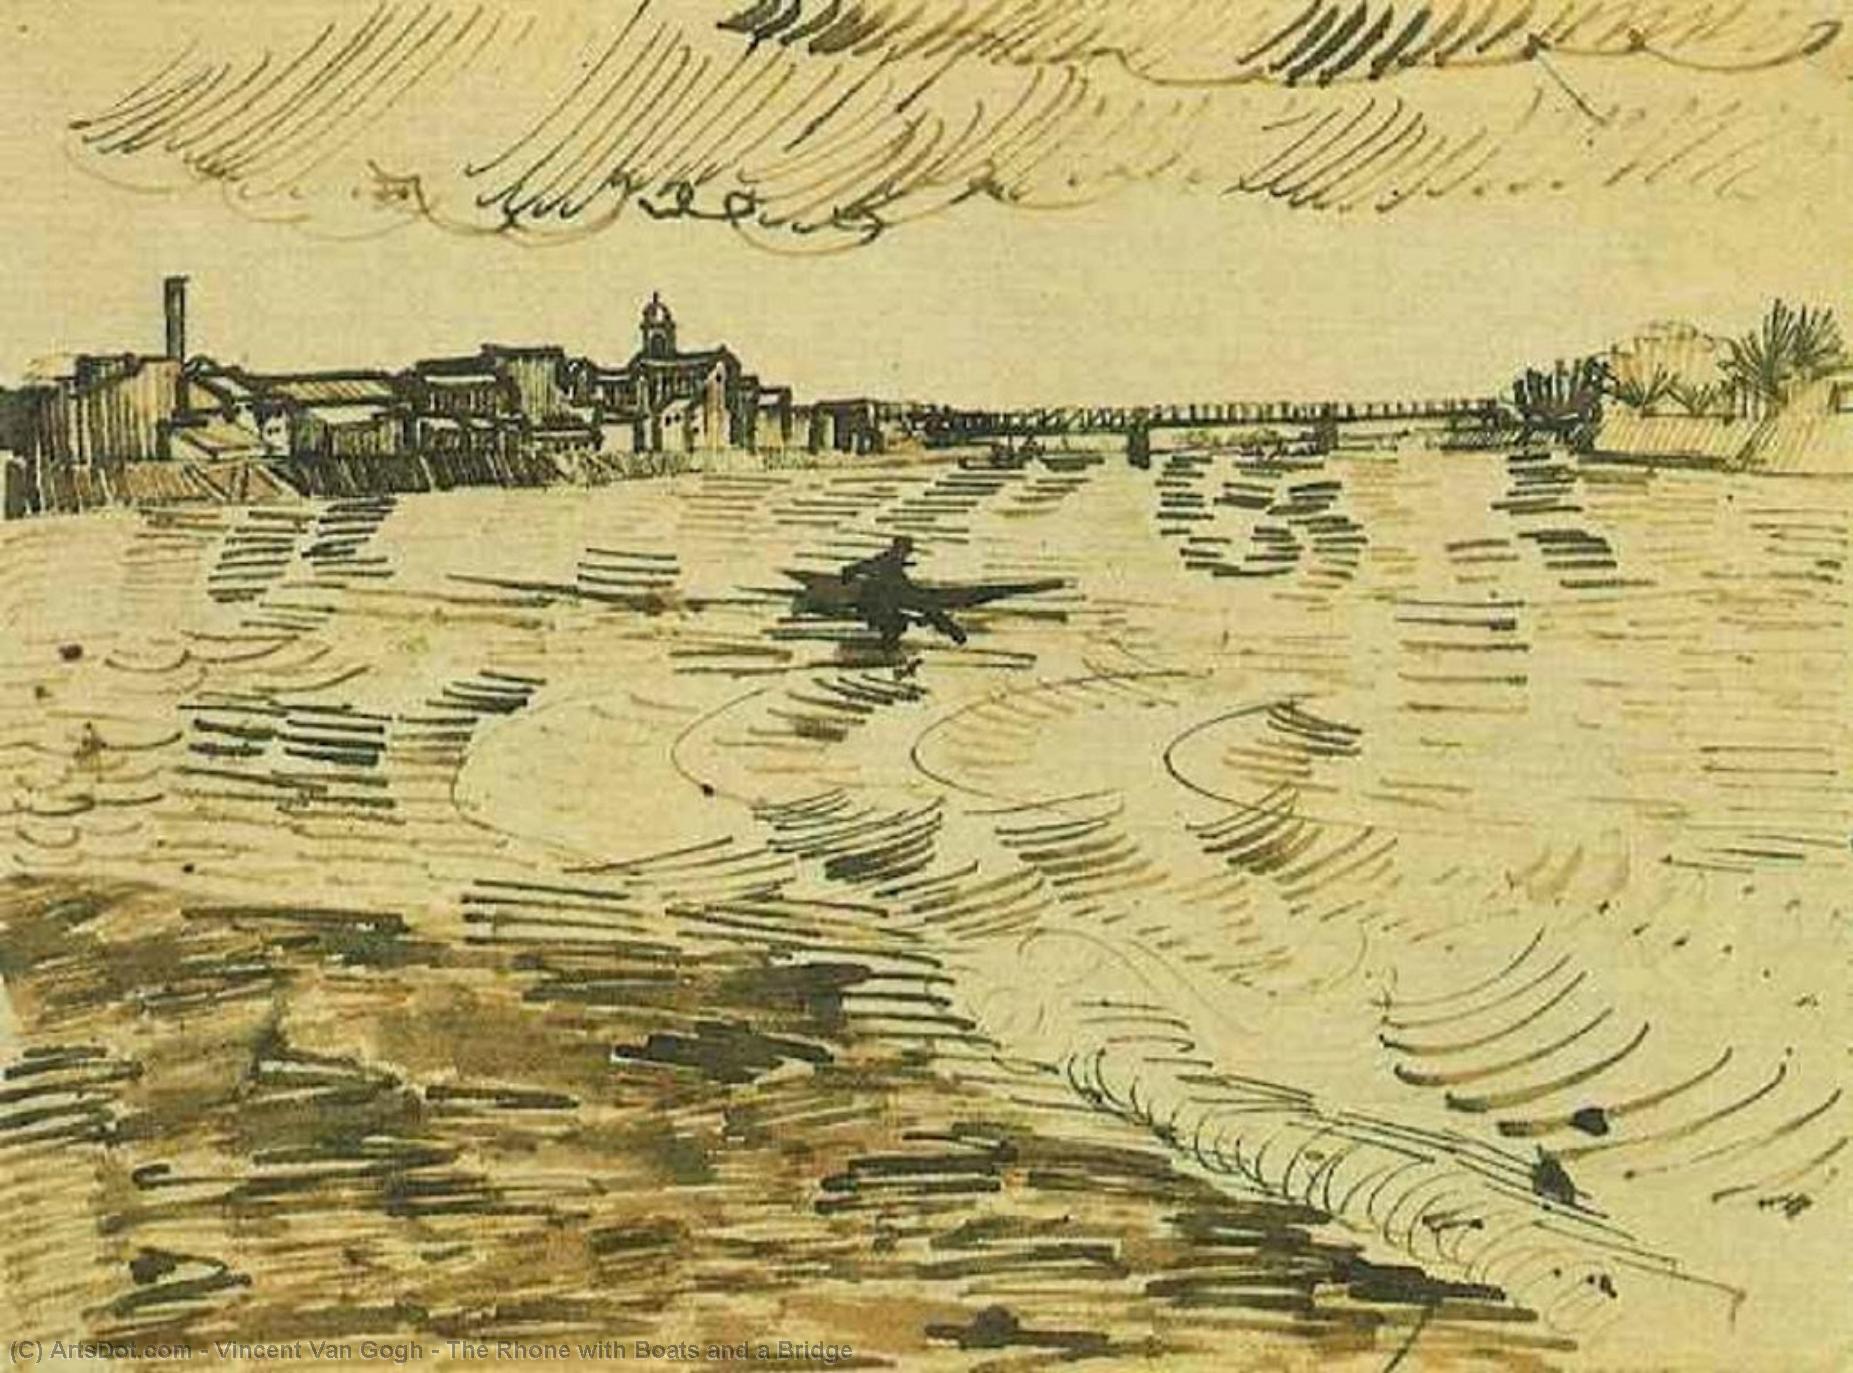 Wikioo.org - Encyklopedia Sztuk Pięknych - Malarstwo, Grafika Vincent Van Gogh - The Rhone with Boats and a Bridge